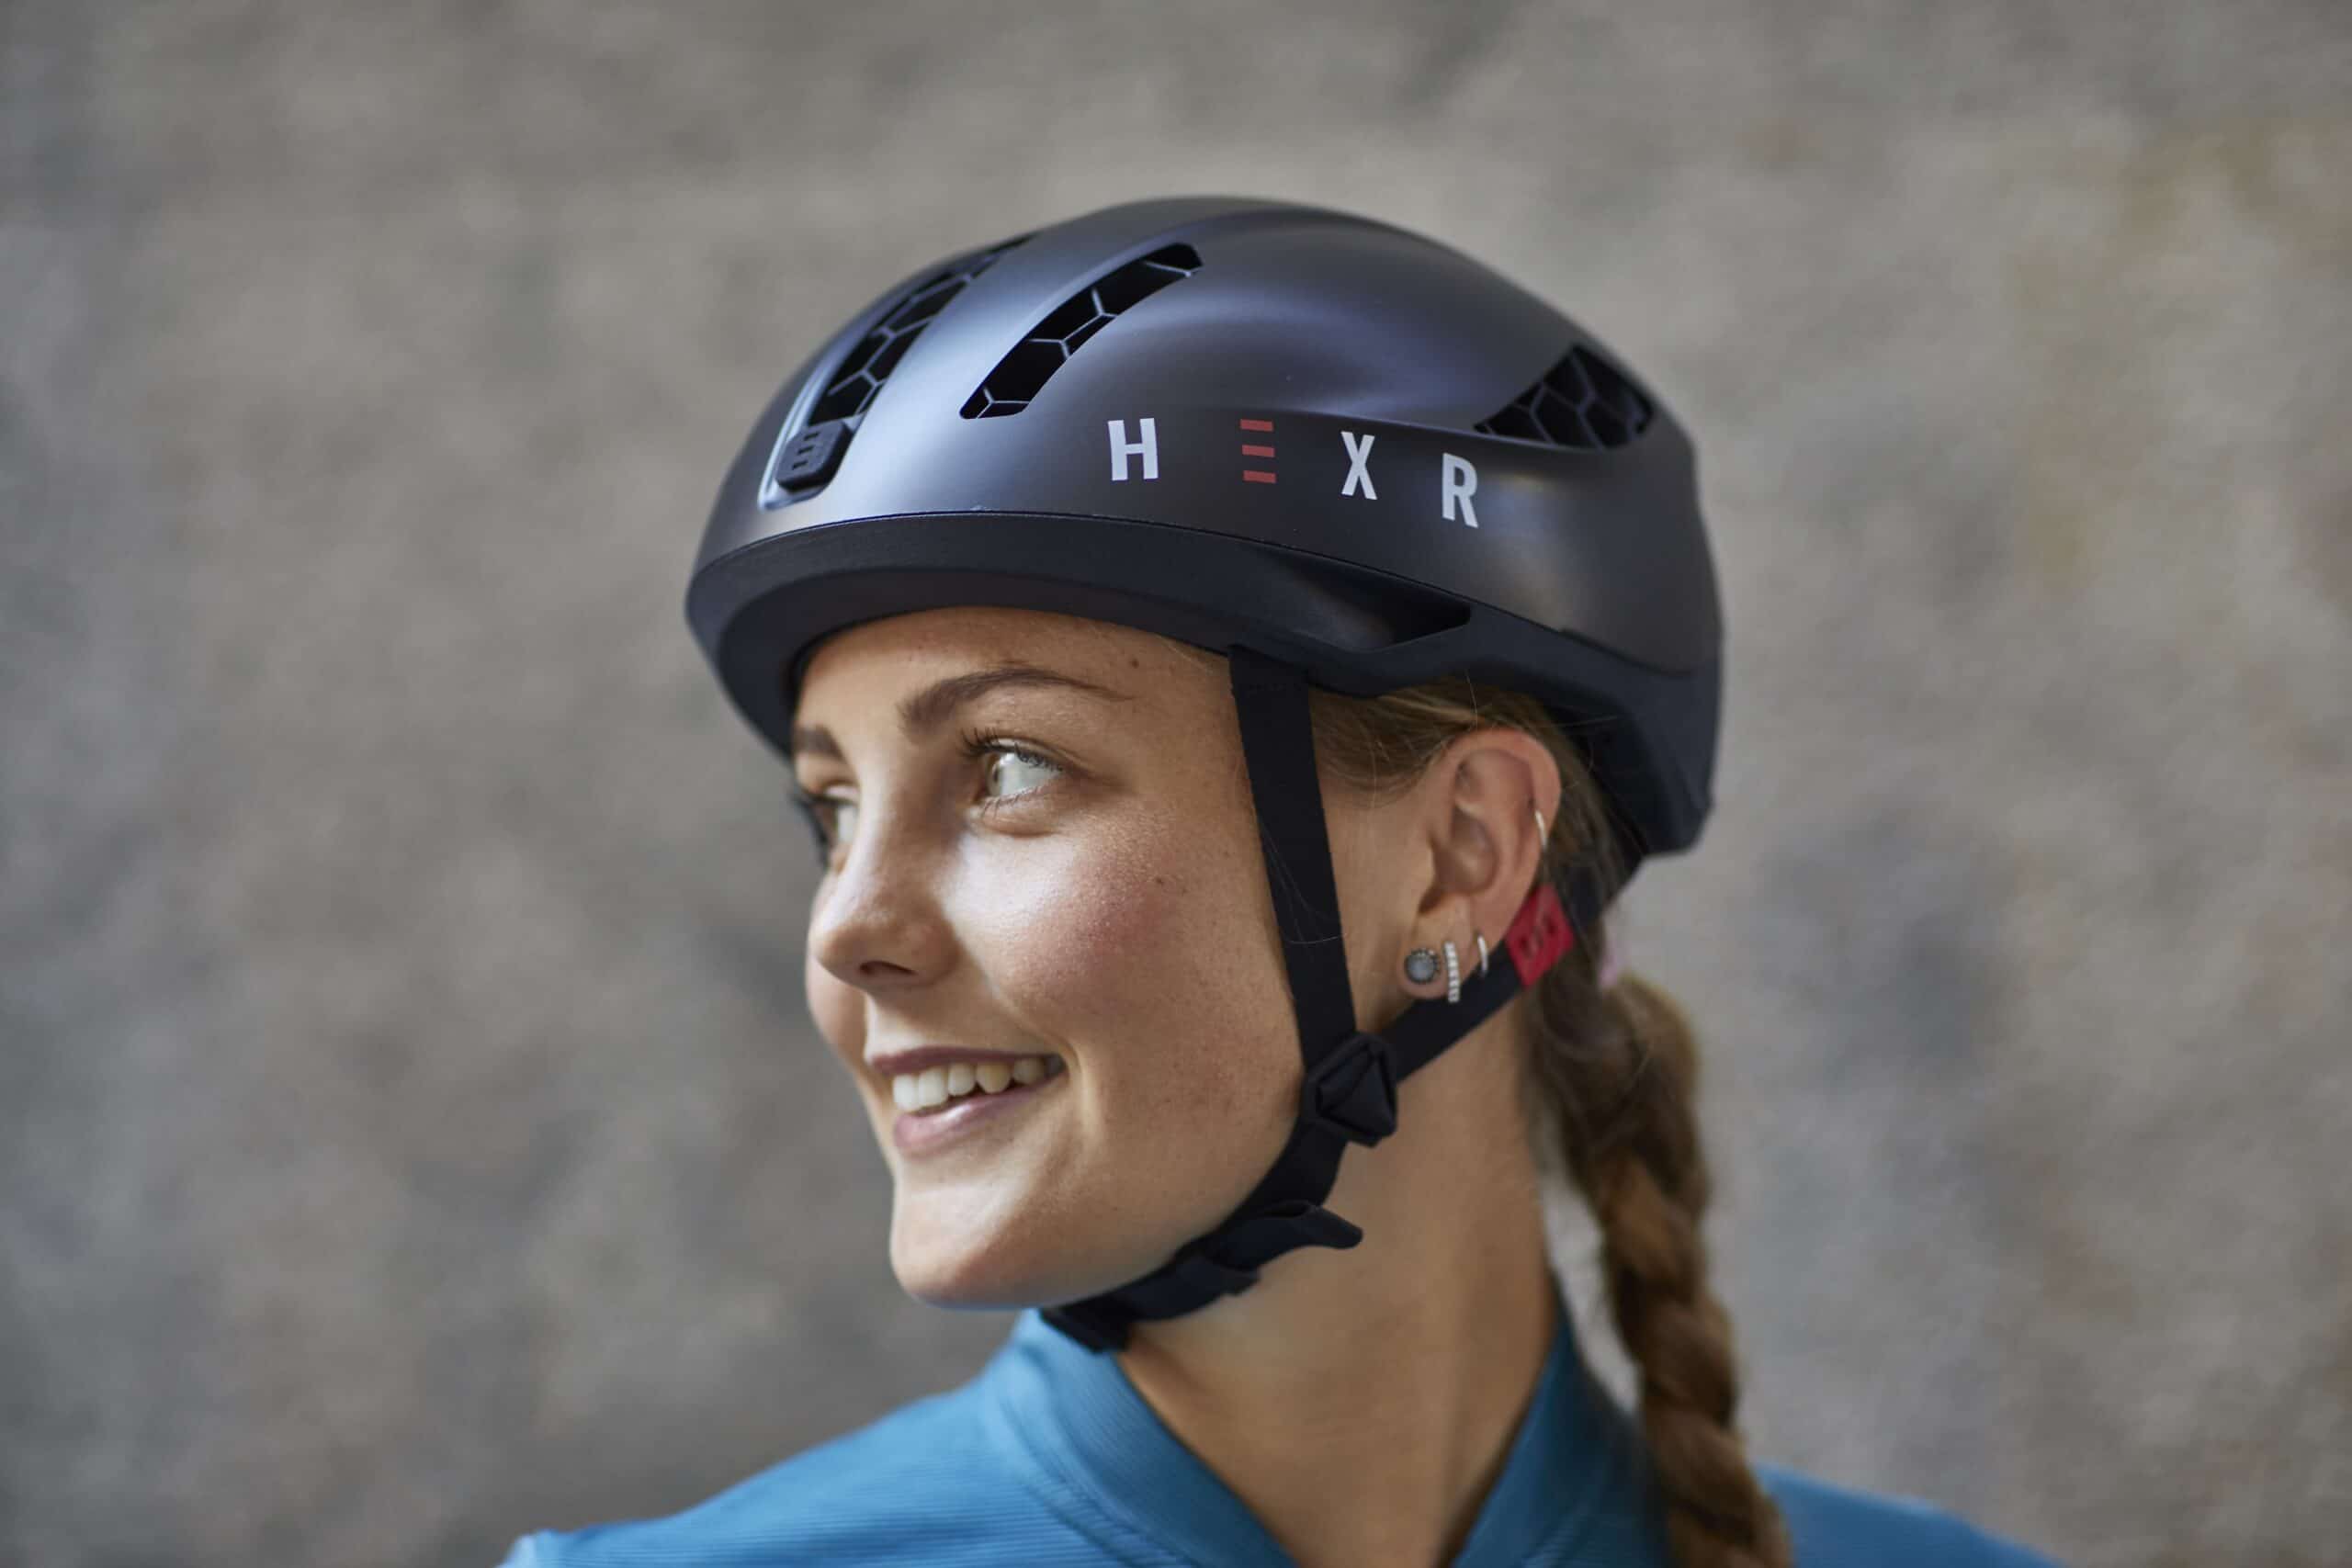 Hexr smartphone cycling helmet fitting app